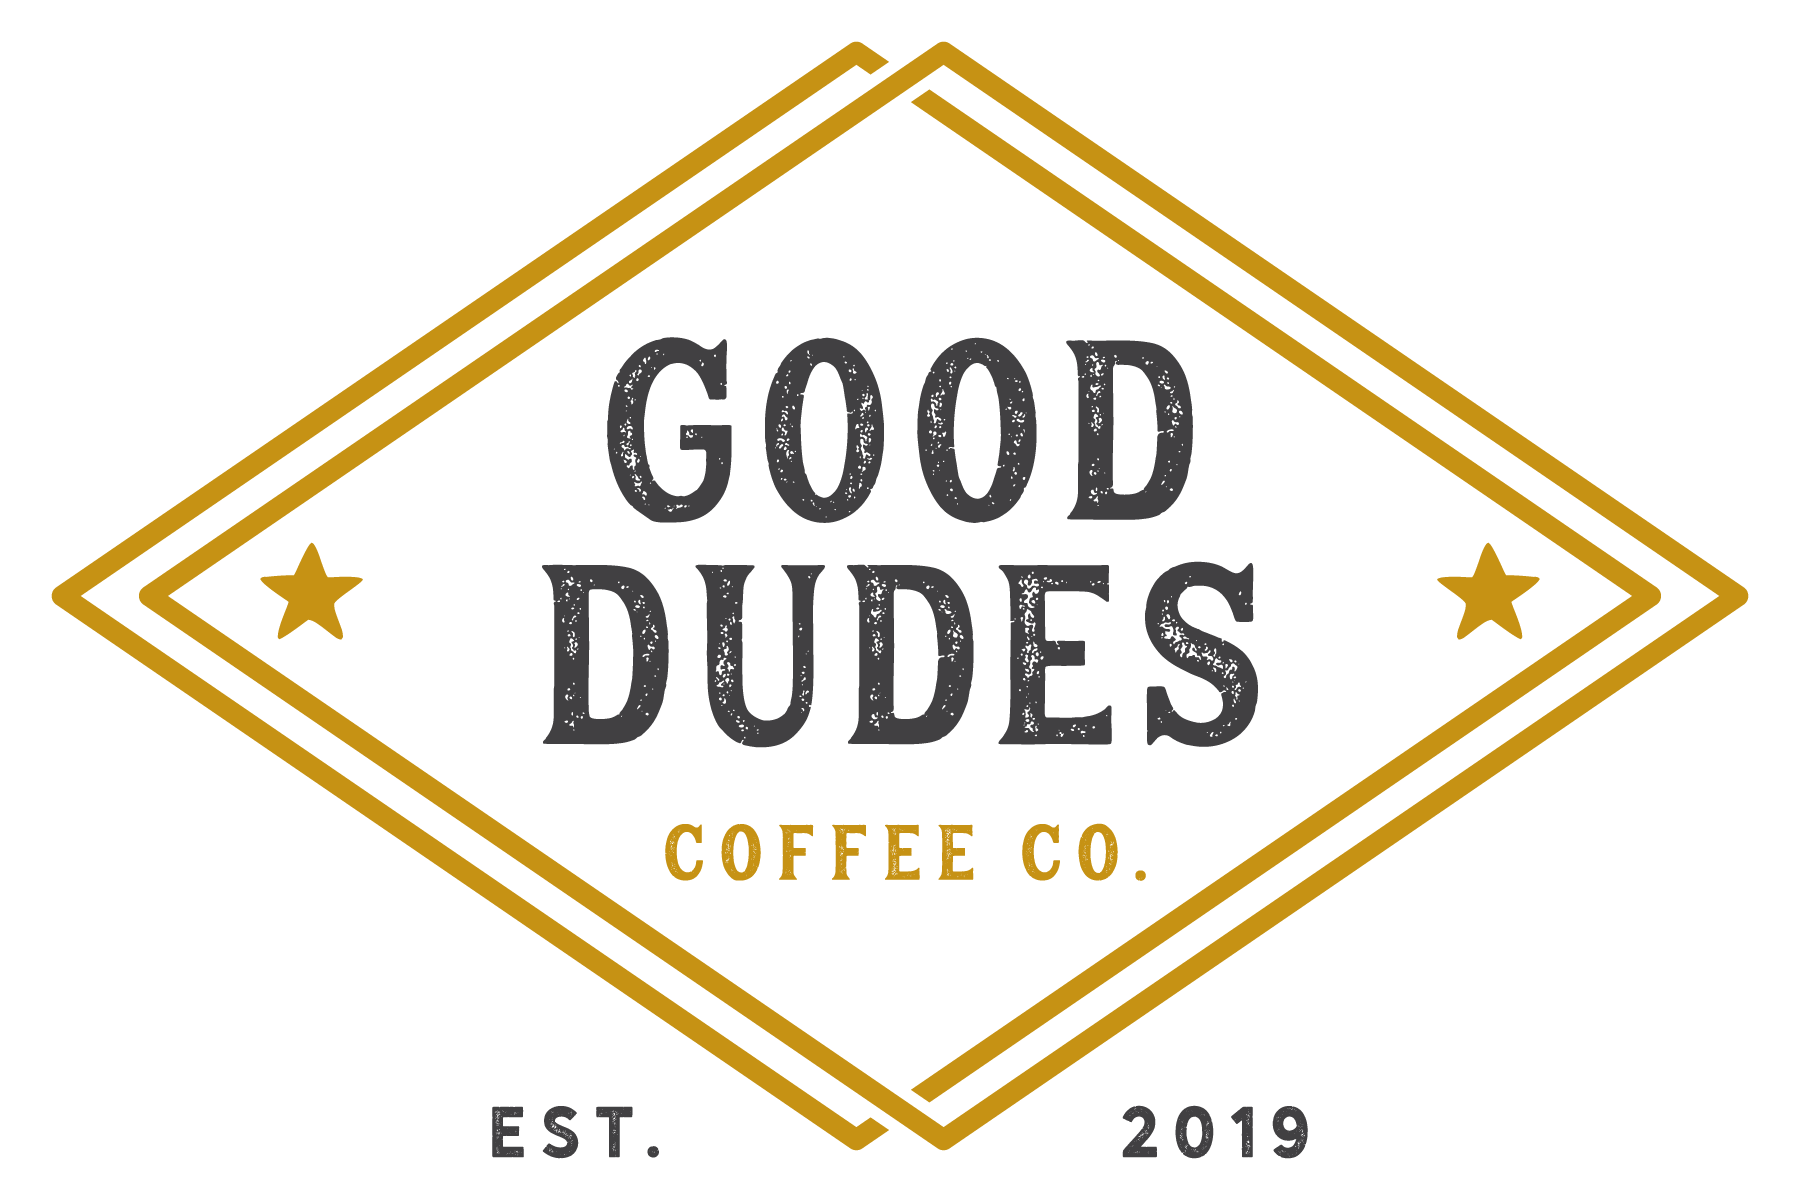 Good Dudes Coffee Inc